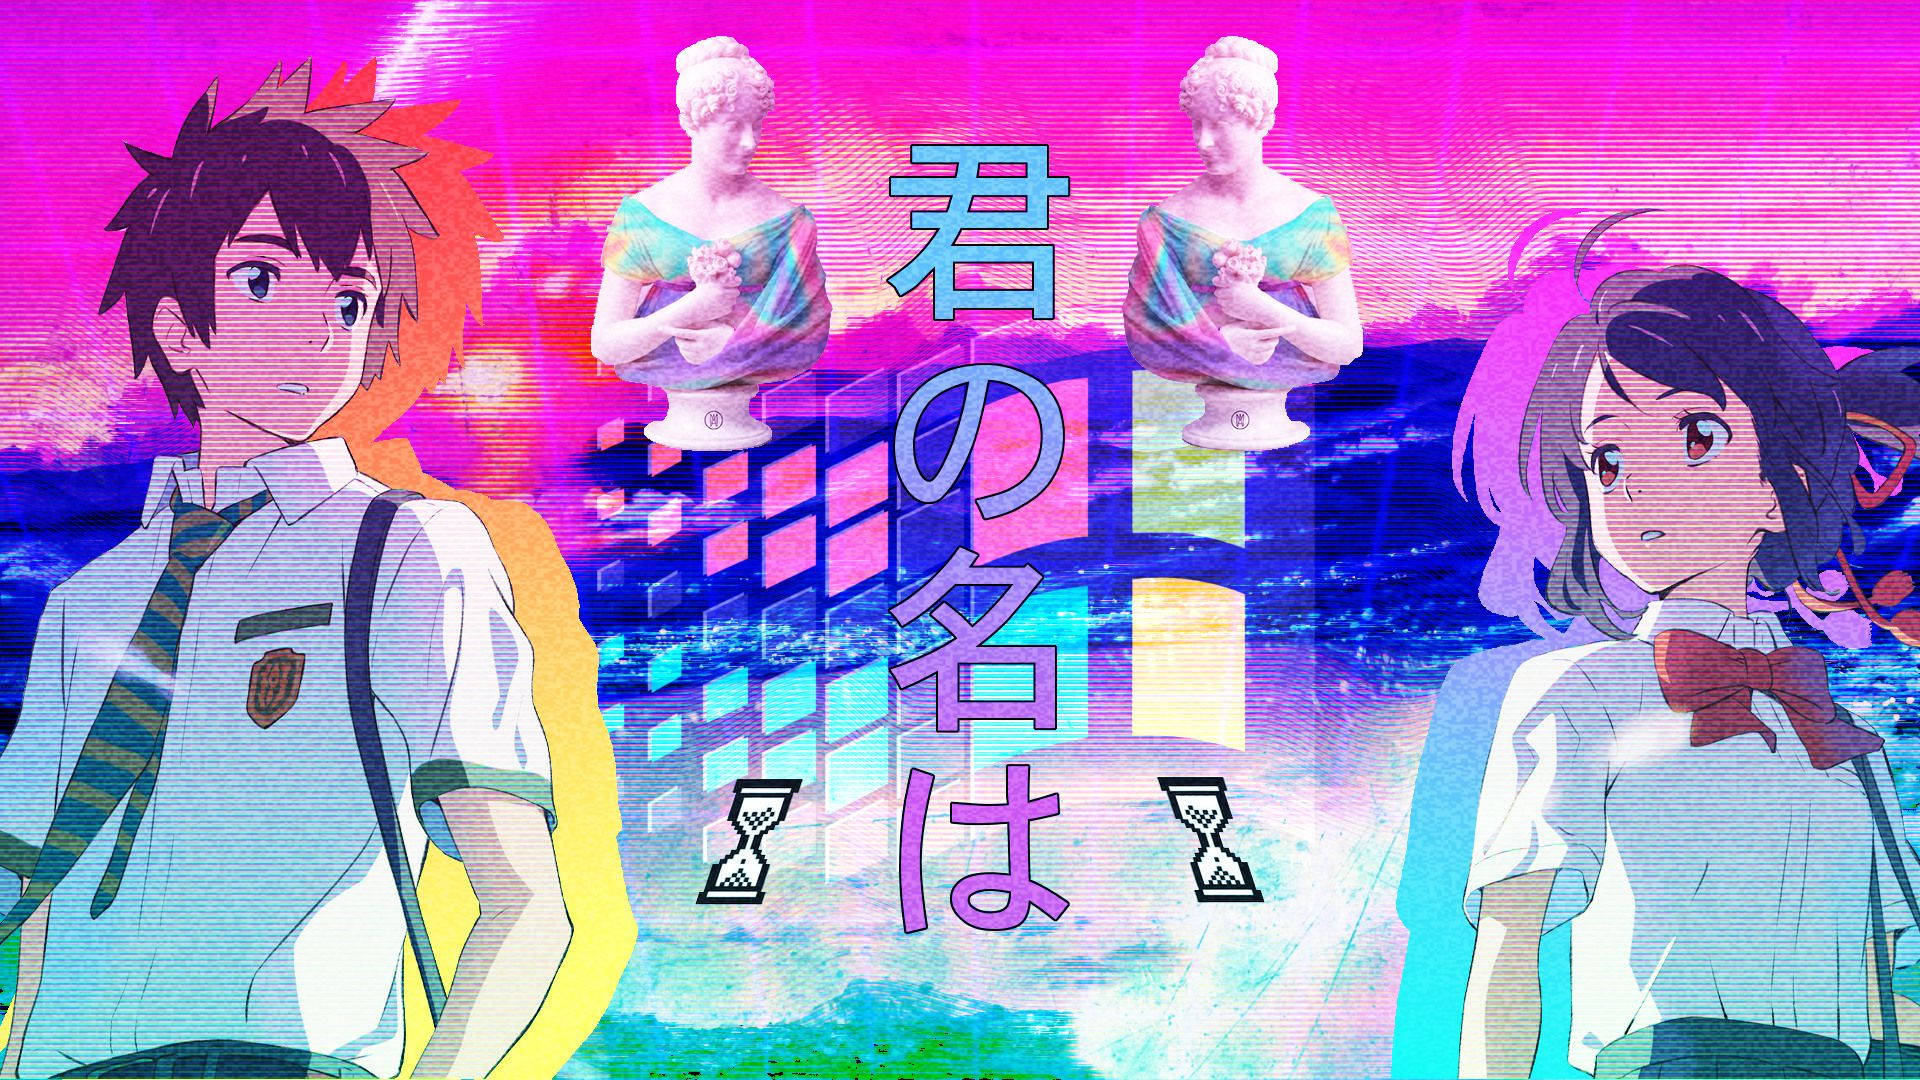 Your Name Anime Aesthetic Art Wallpaper